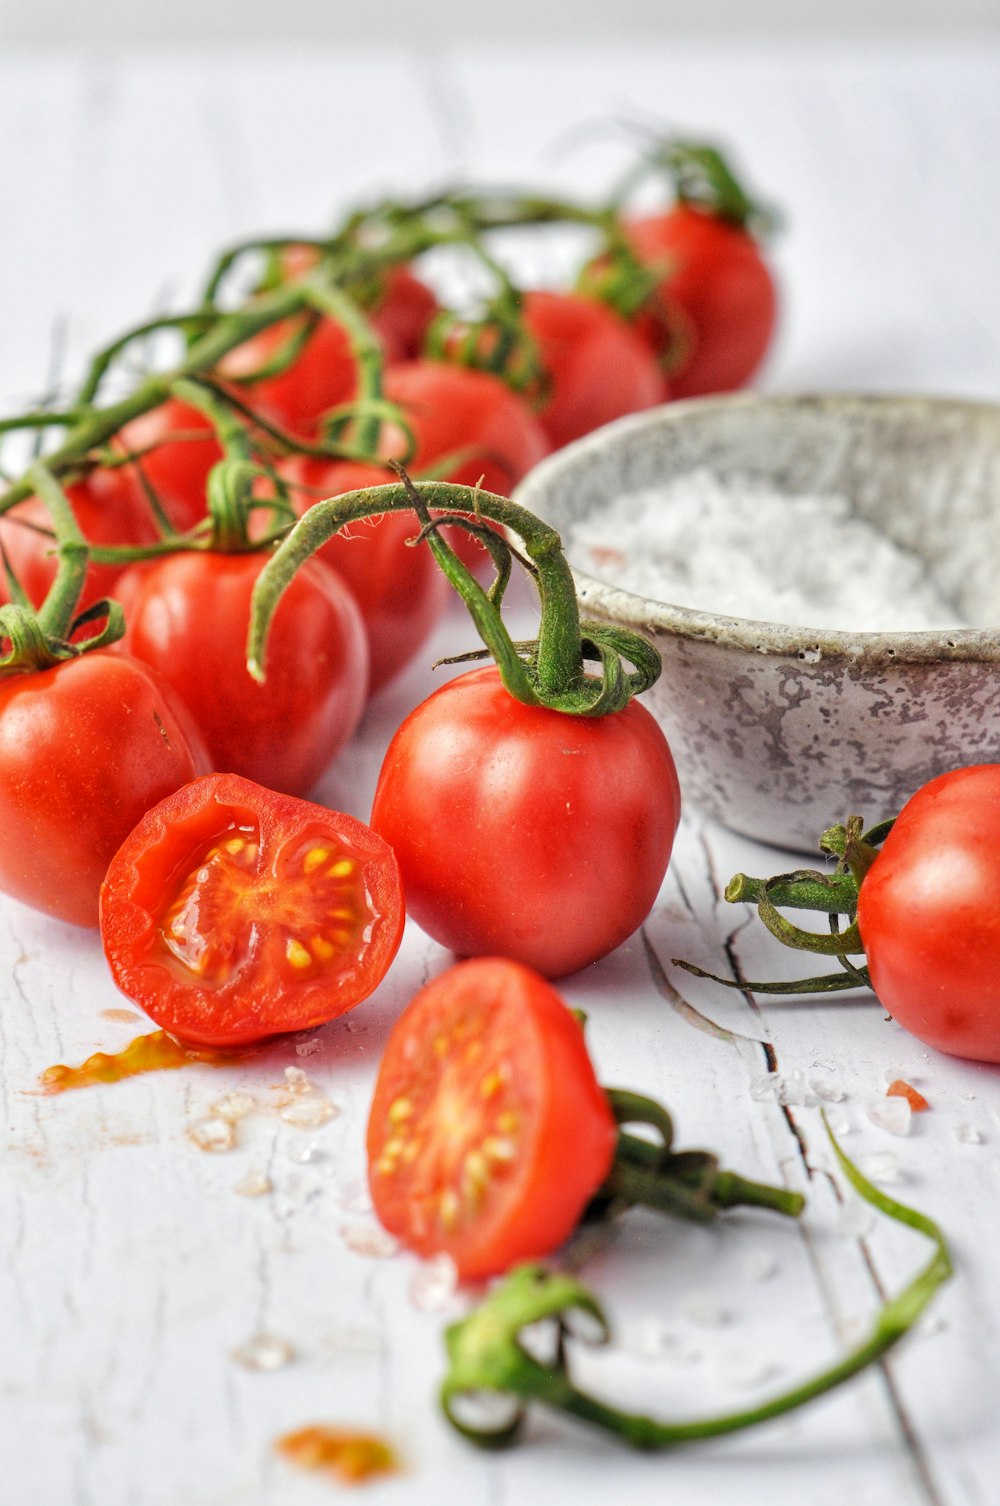 red tomato beside white ceramic bowl